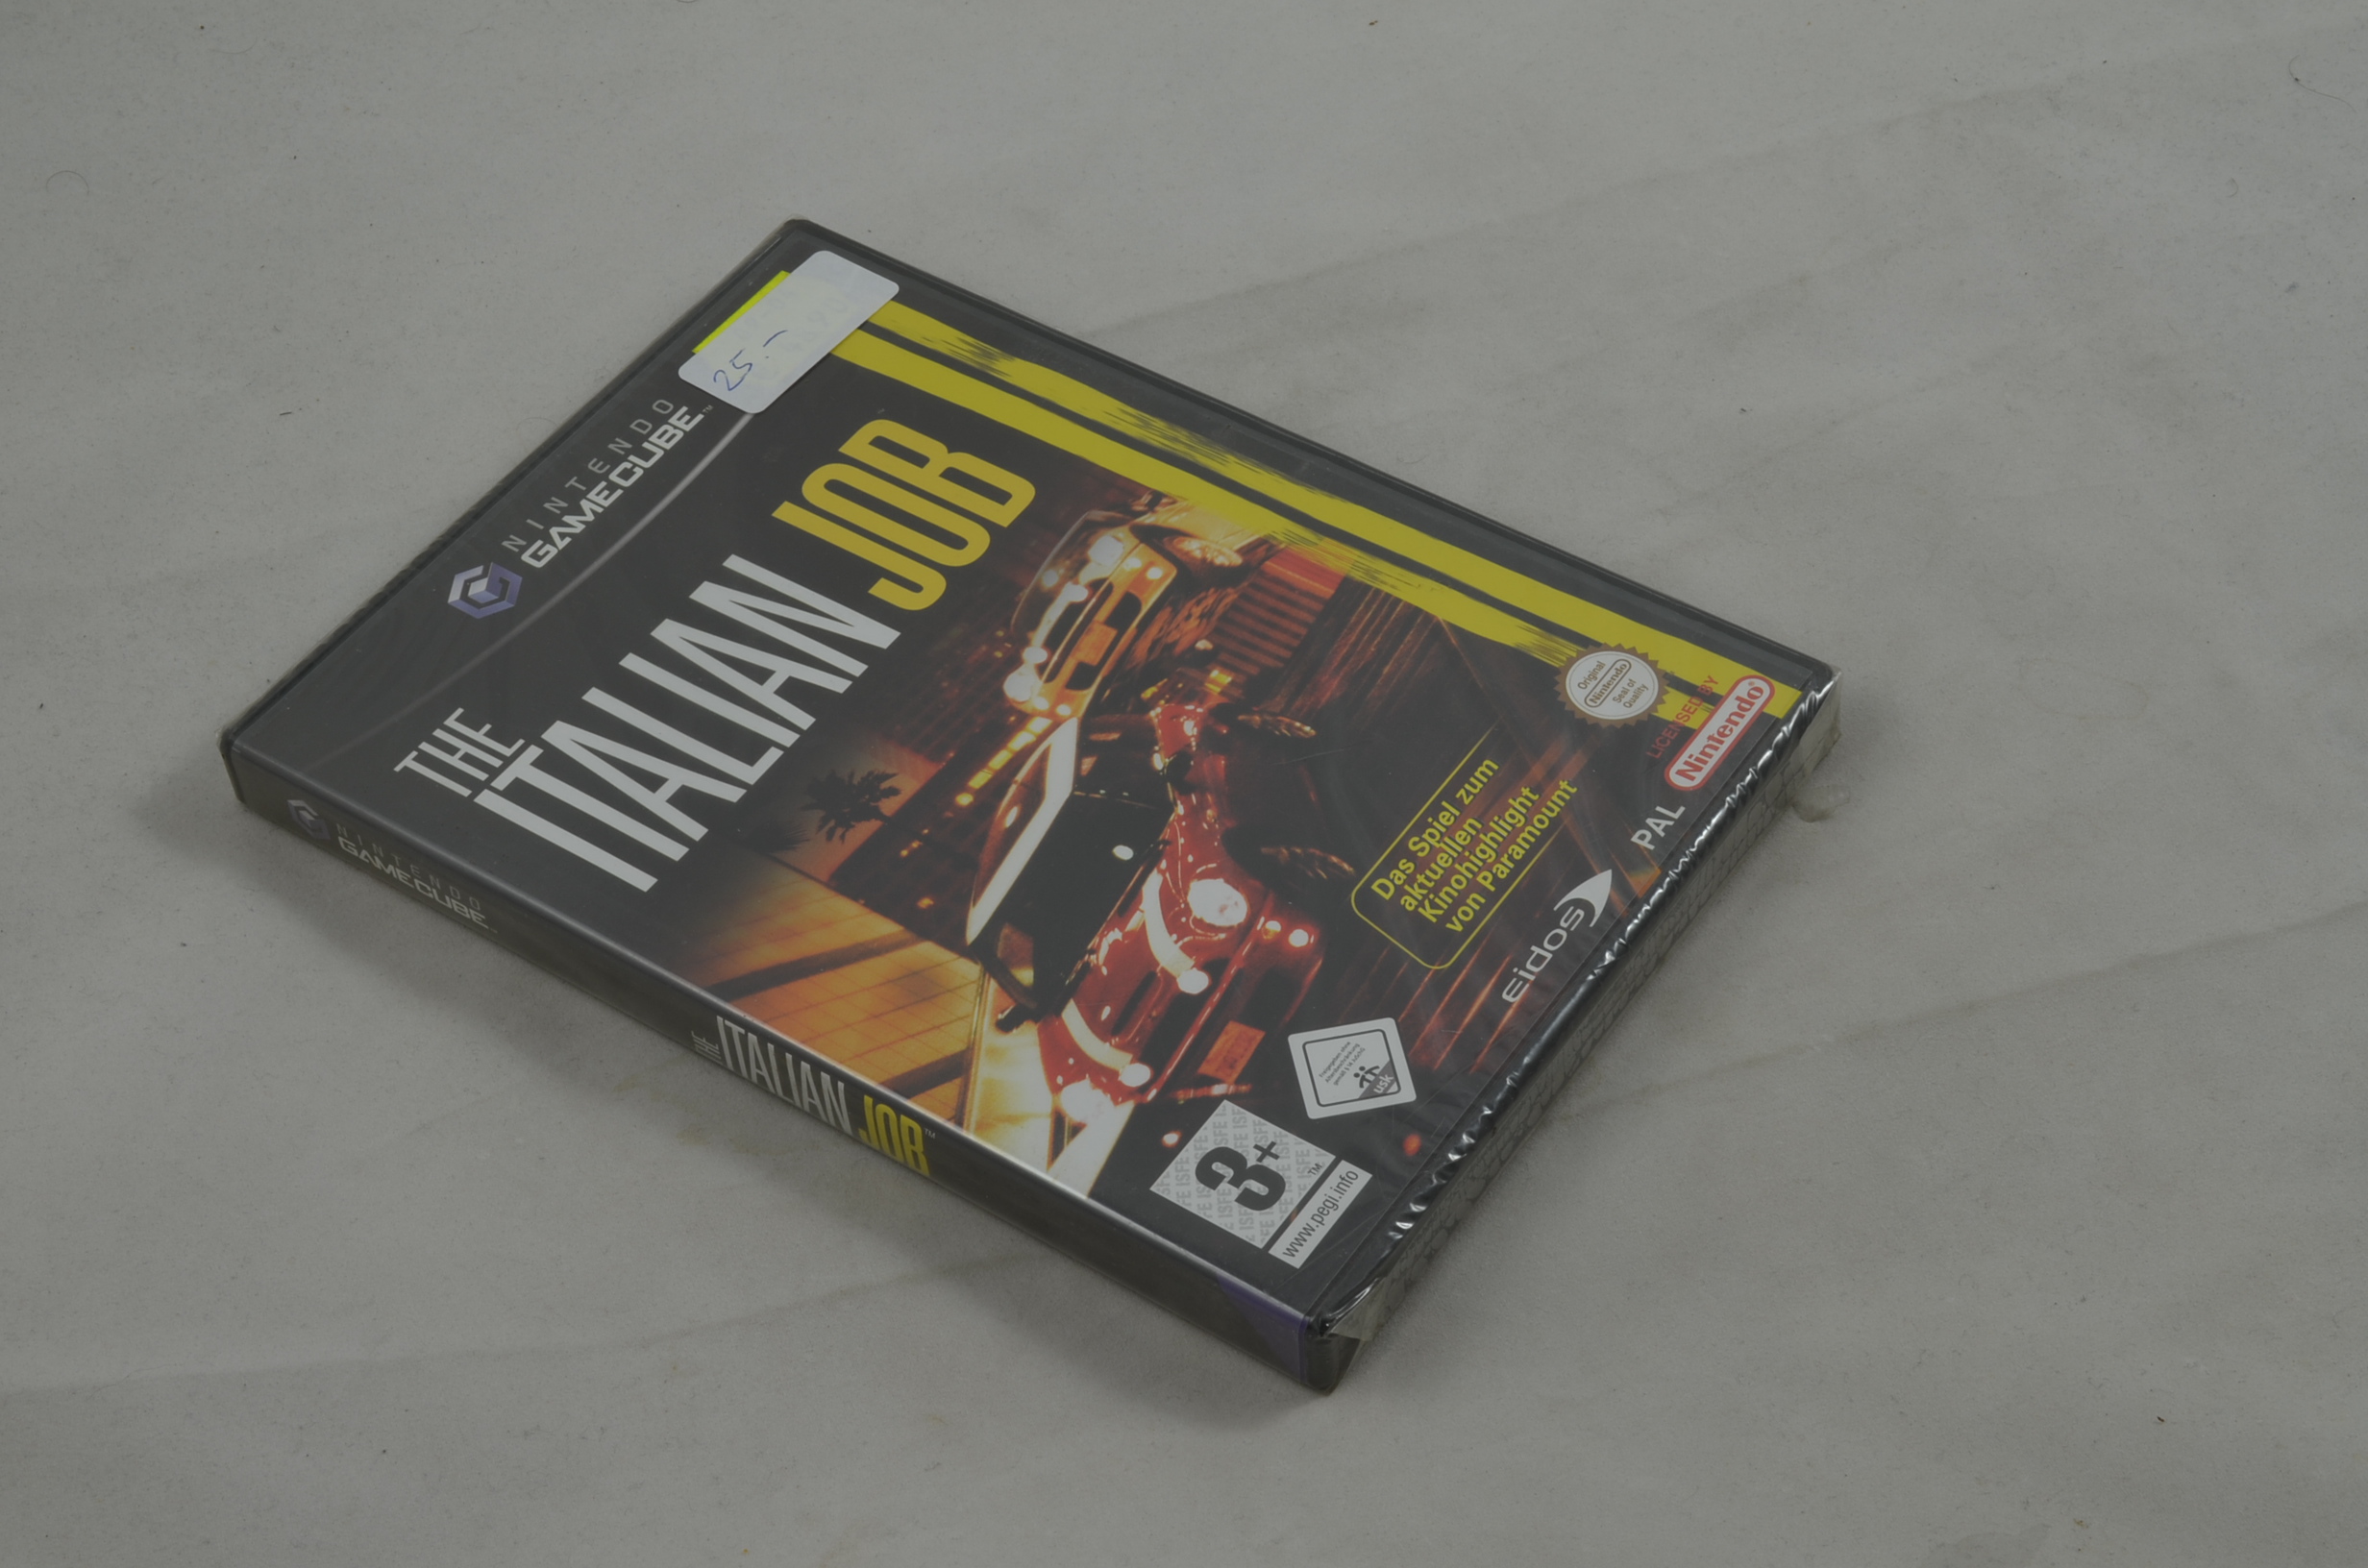 Produktbild von The Italian Job GameCube Spiel CIB (Neu)